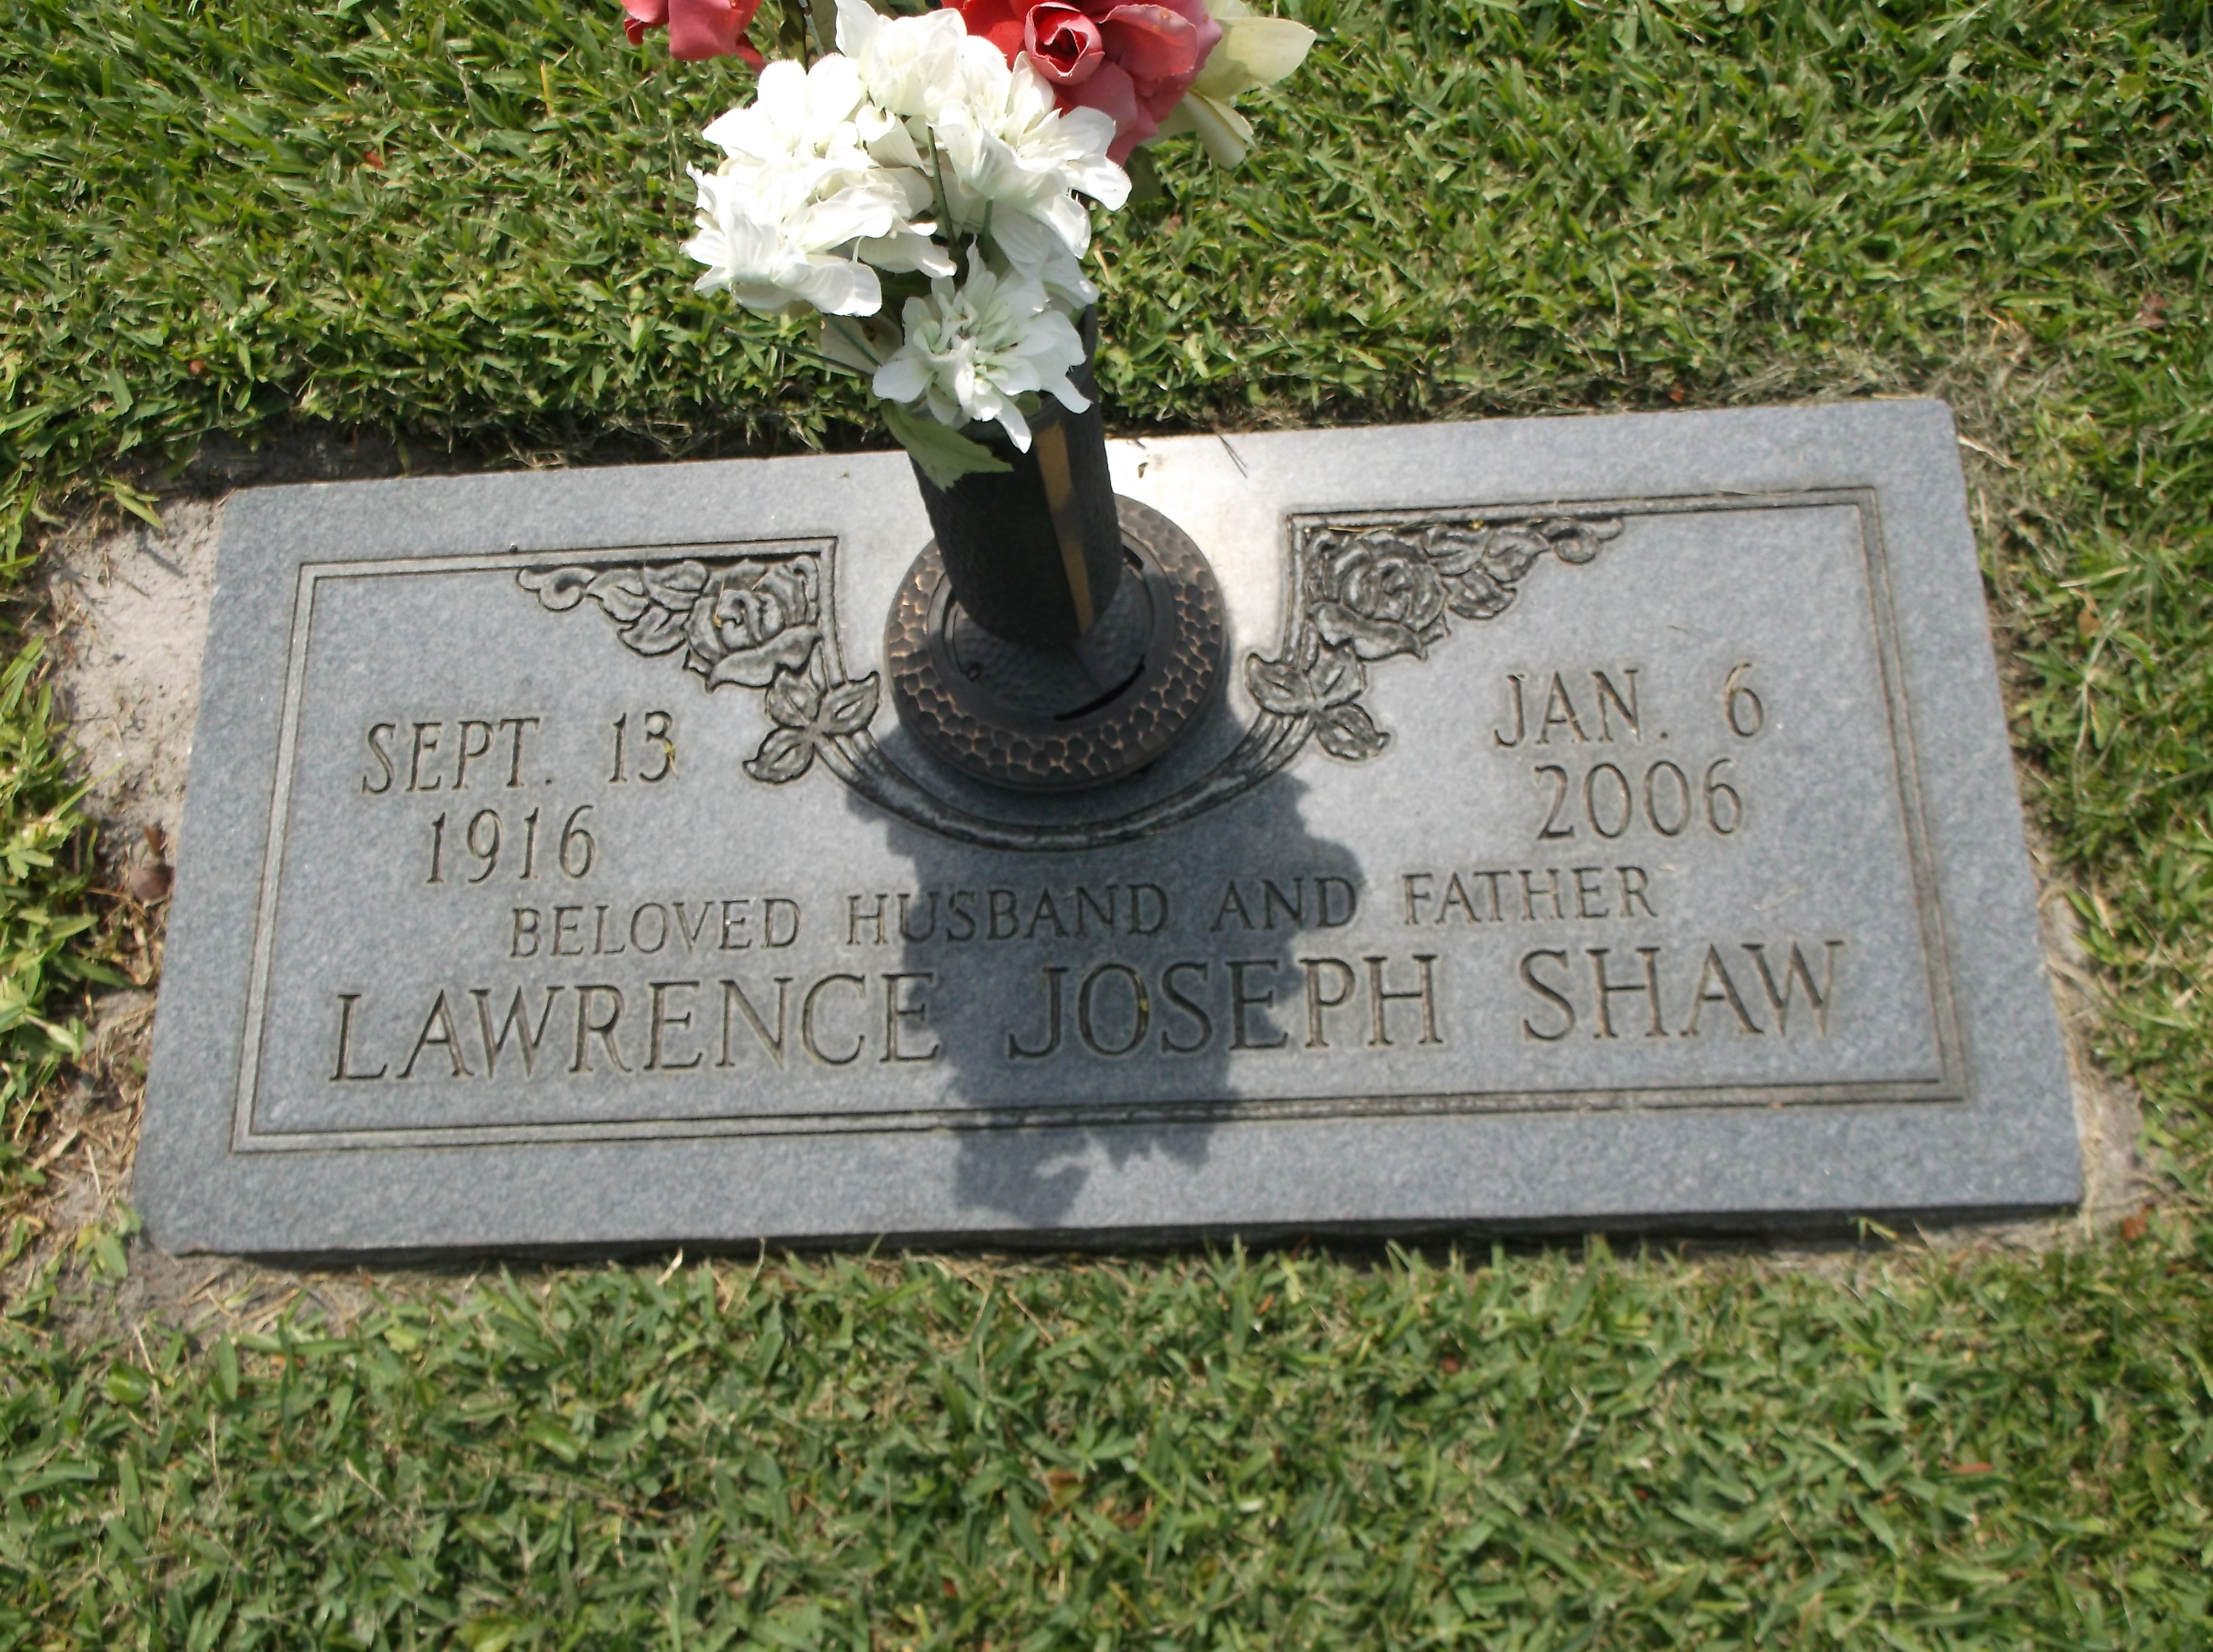 Lawrence Joseph Shaw